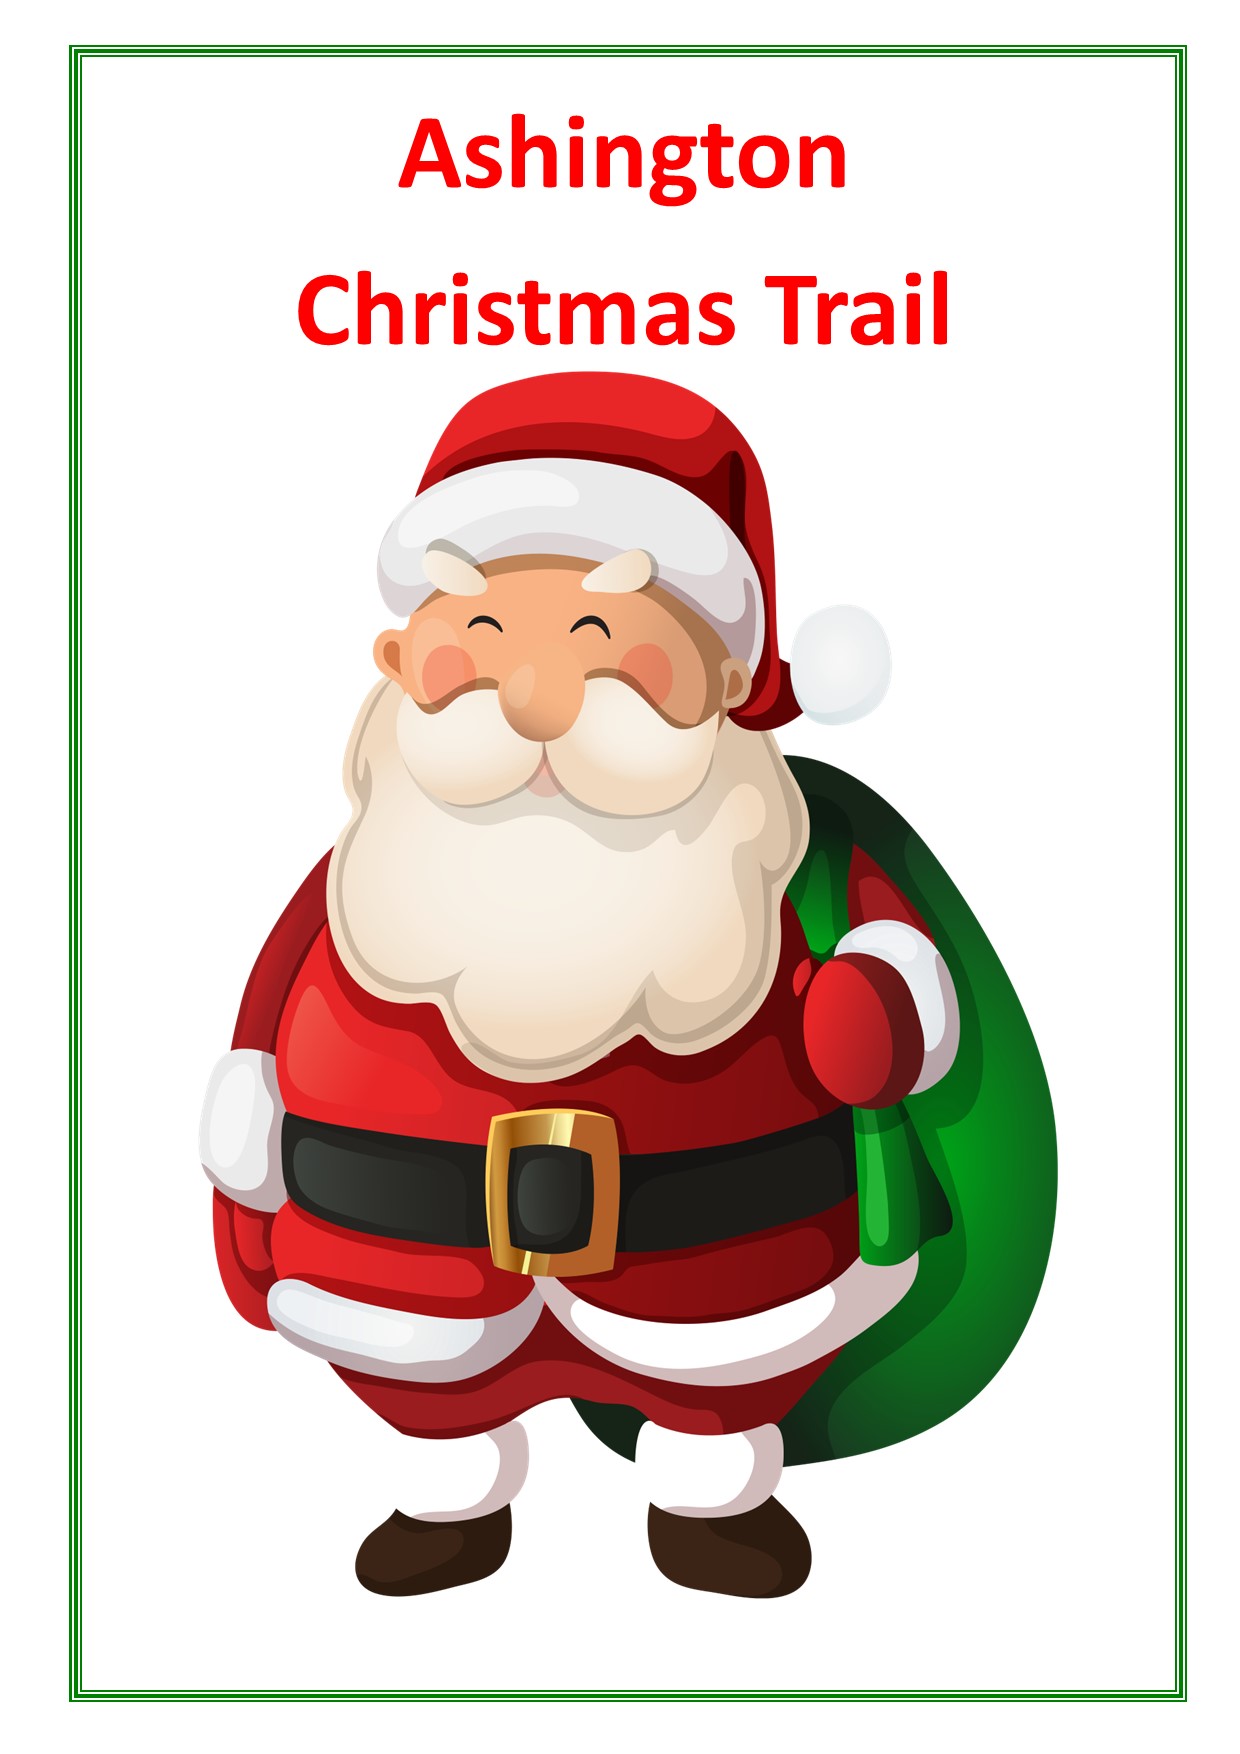 Ashington Christmas Trail Launch